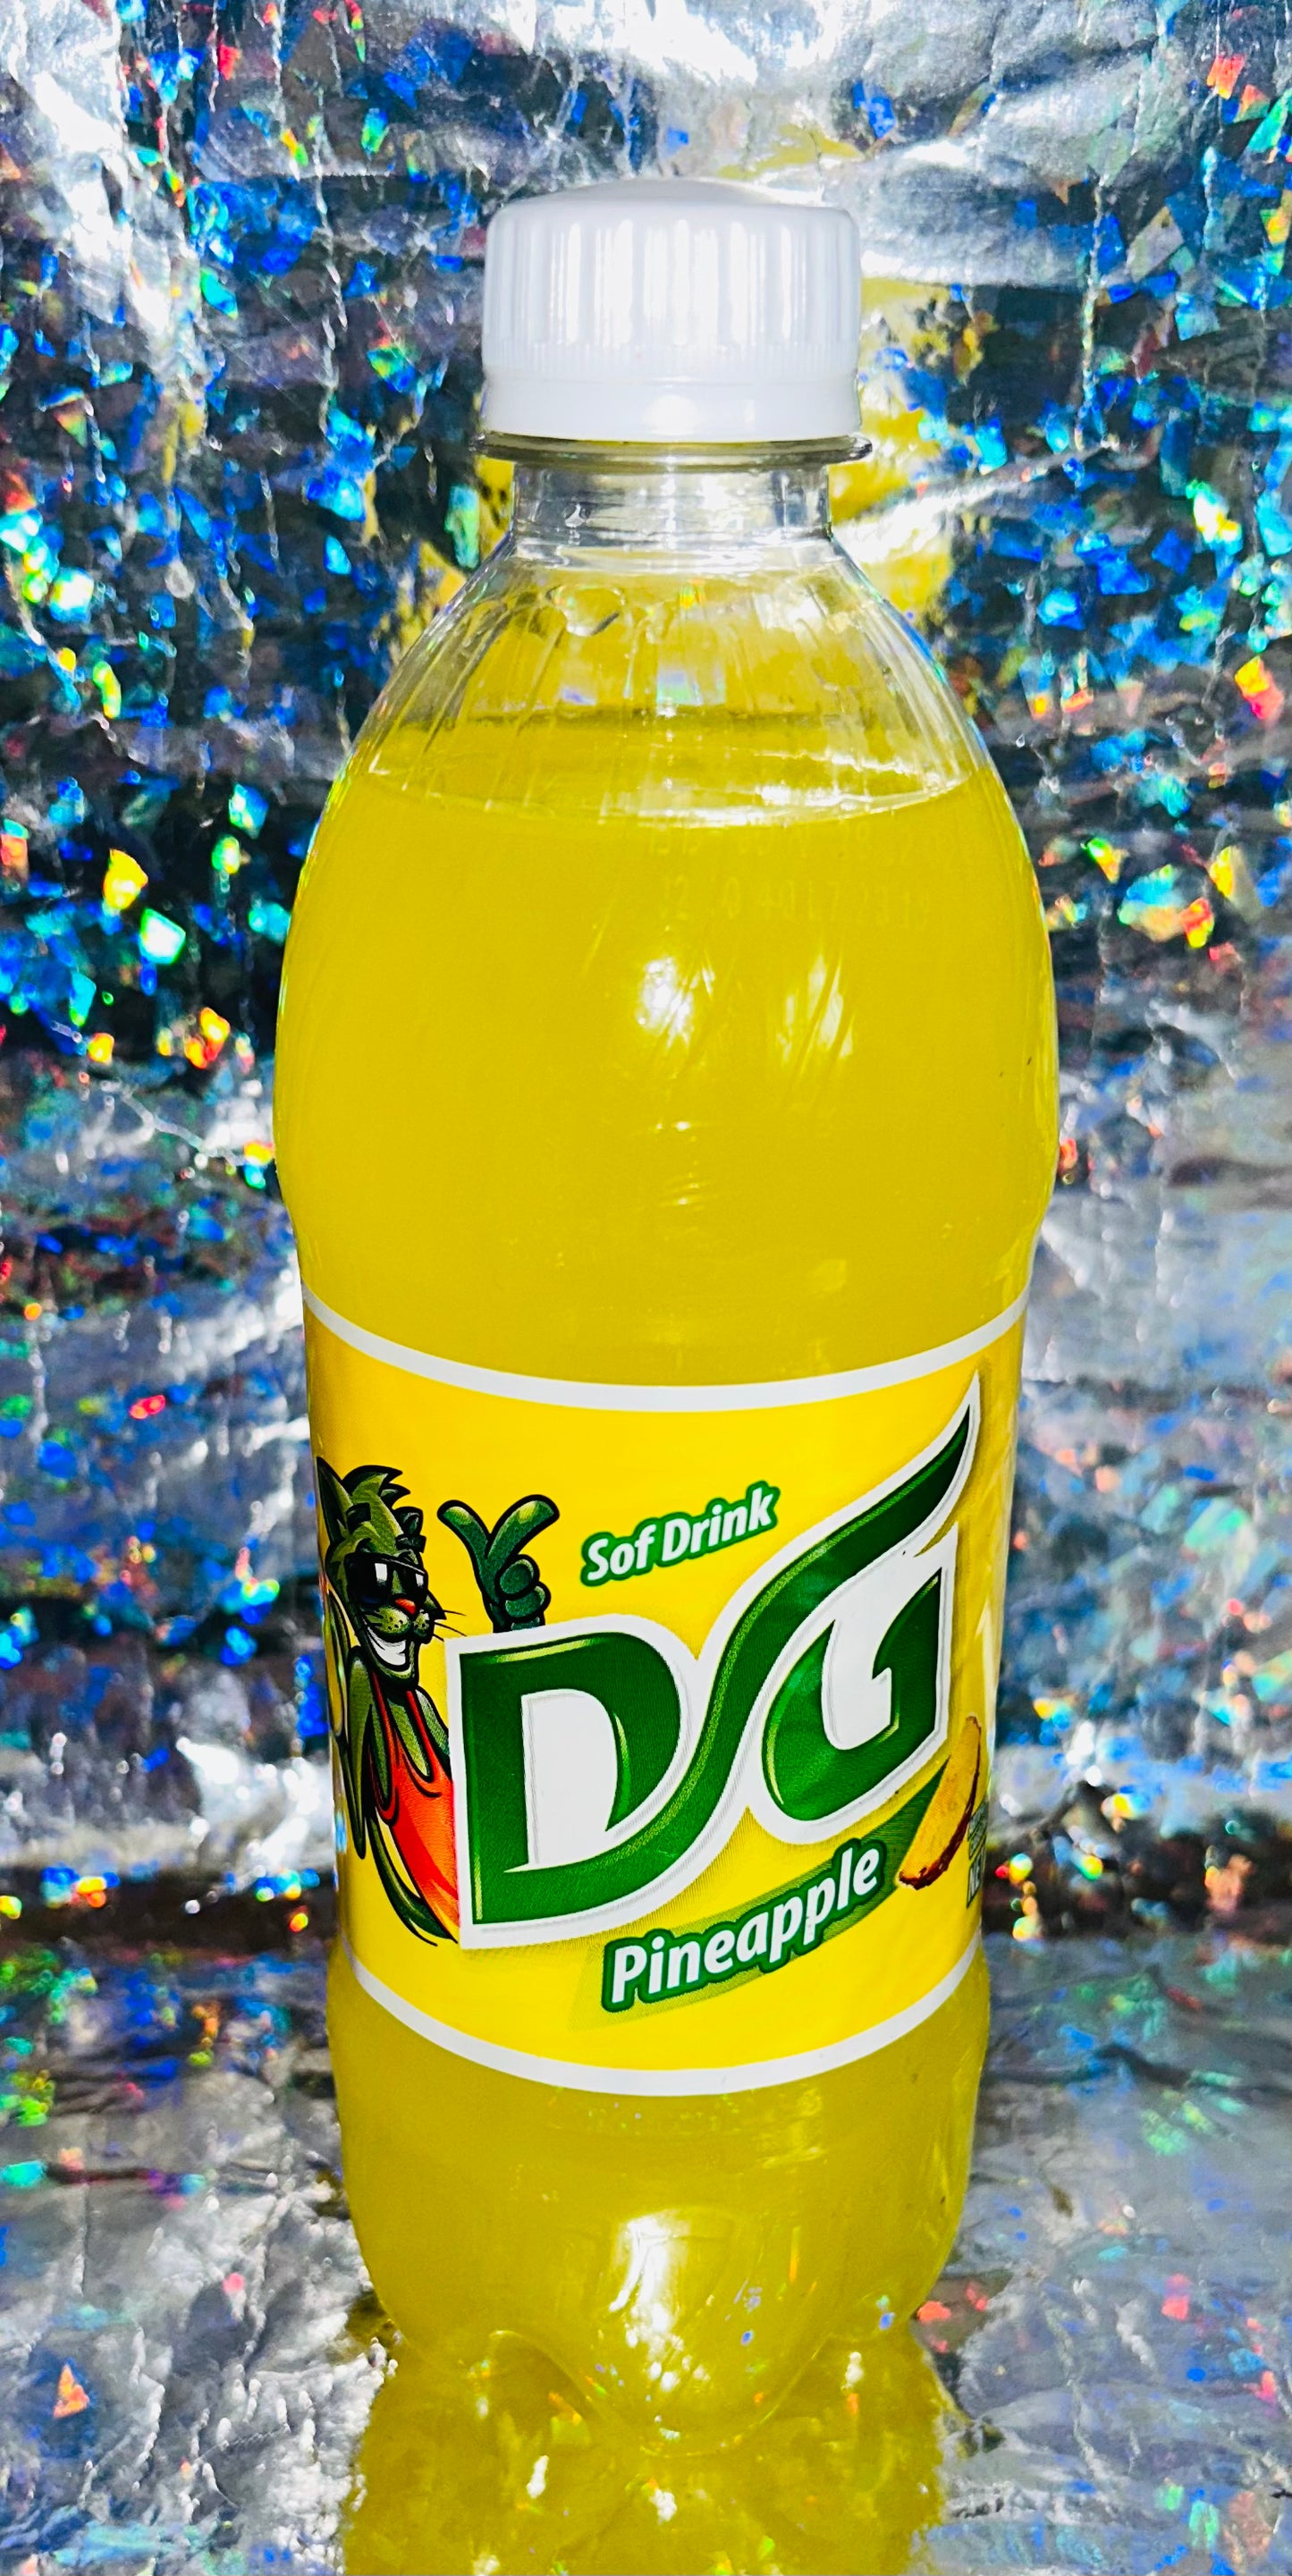 DG Sof Drink